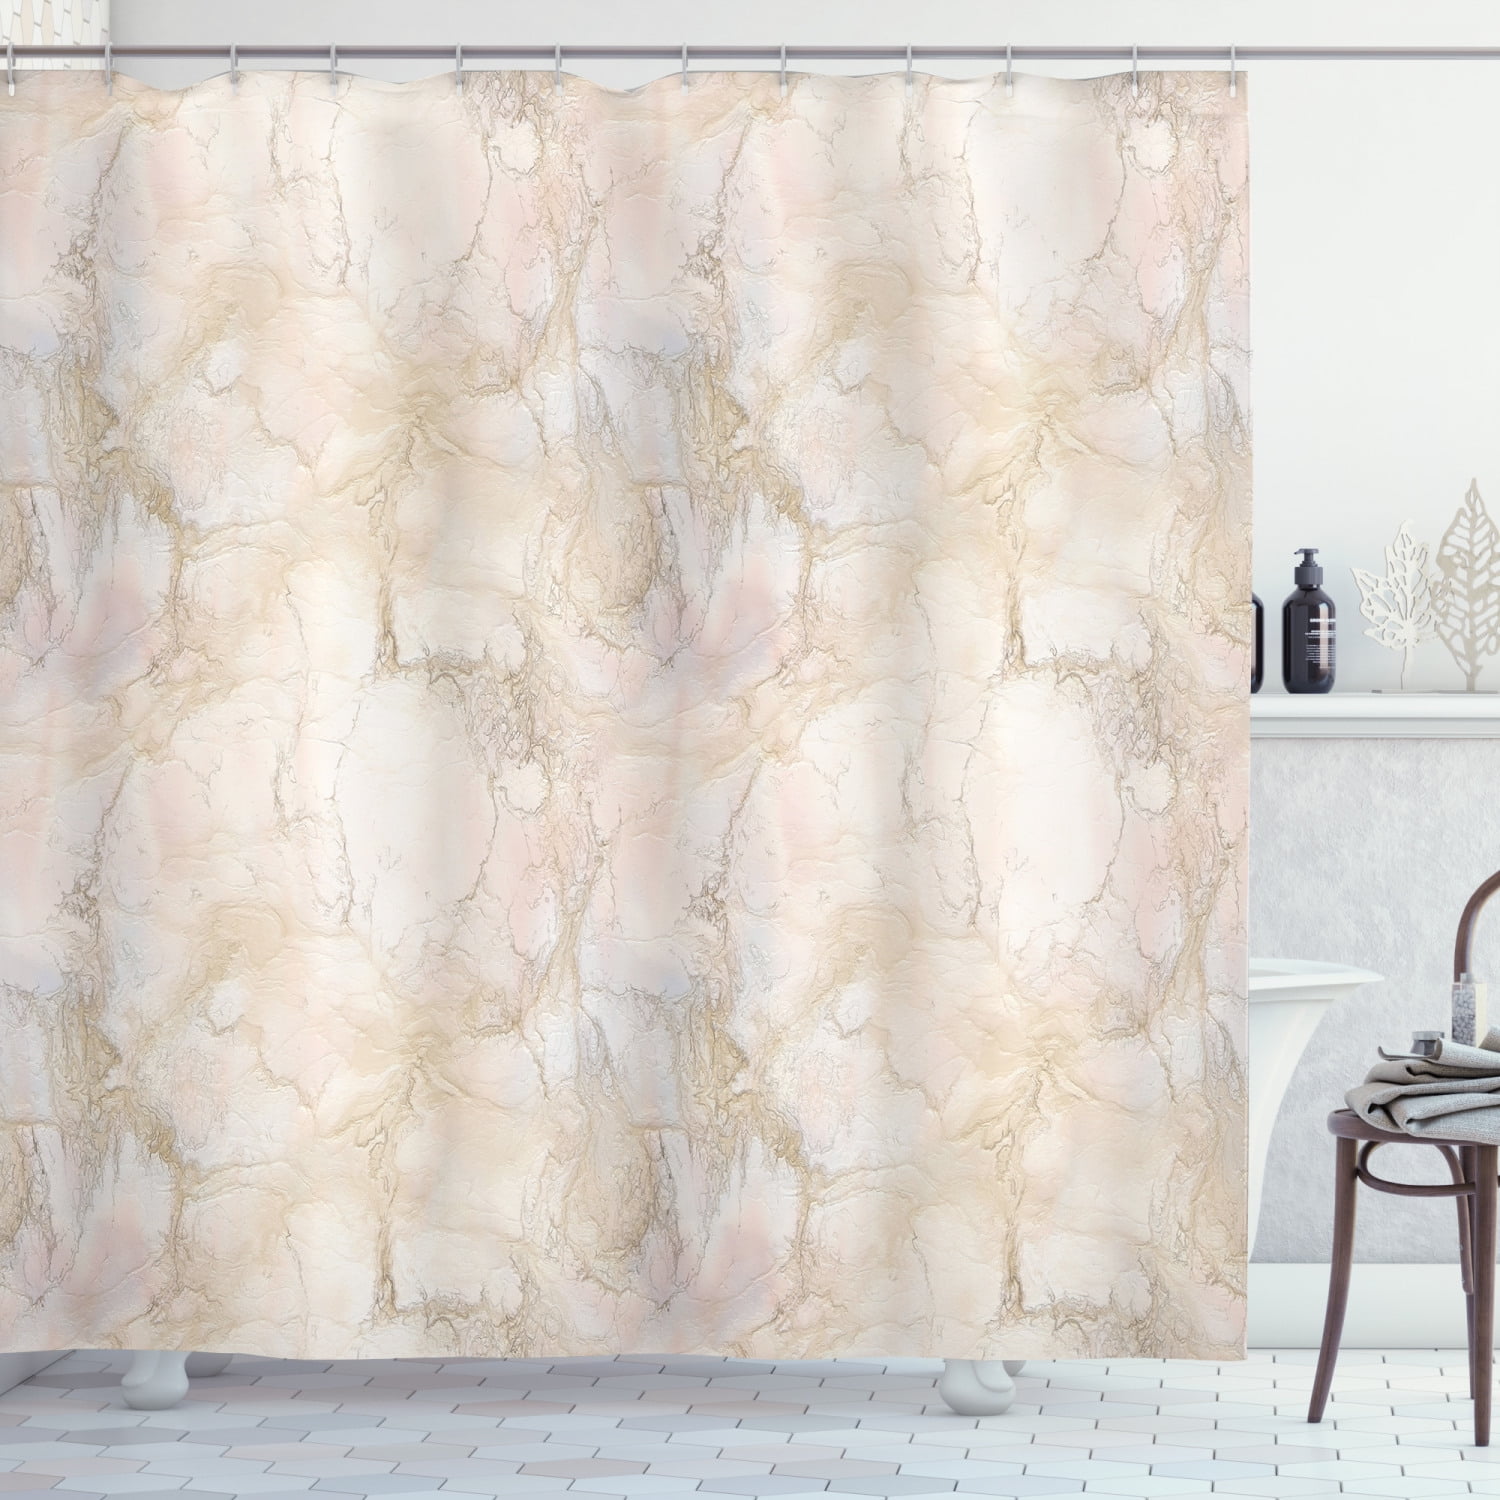 Pink Peach Waterproof Bathroom Polyester Shower Curtain Liner Water Resistant 